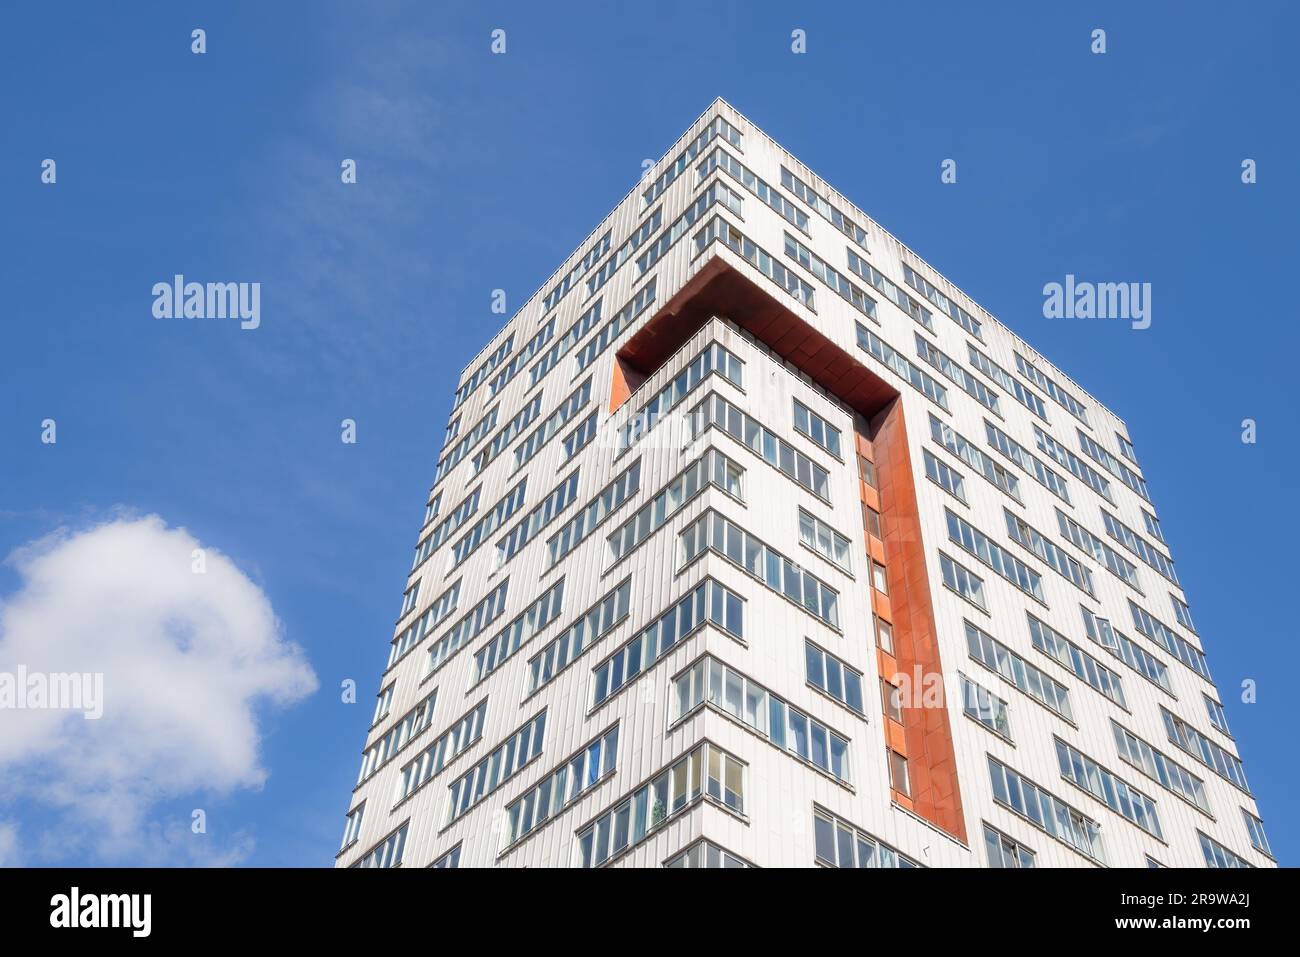 Amsterdam, Netherlands - Ij-Toren housing tower by Neutelings Riedijk Stock Photo